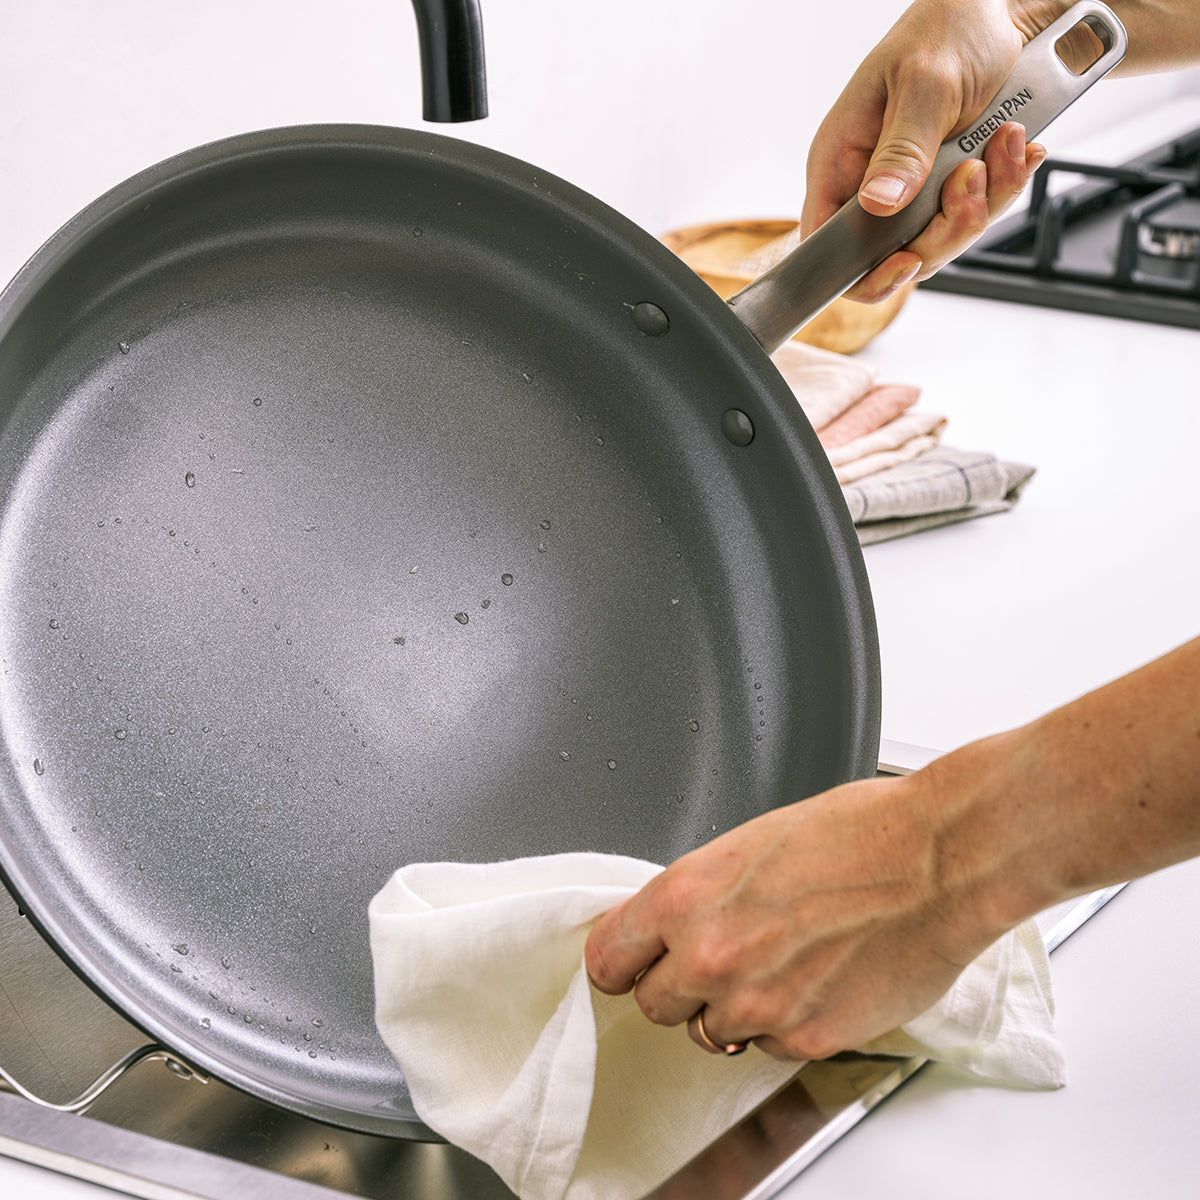 GreenPan Gray Provisions Nonstick Ceramic Frying Pan 10 Inch